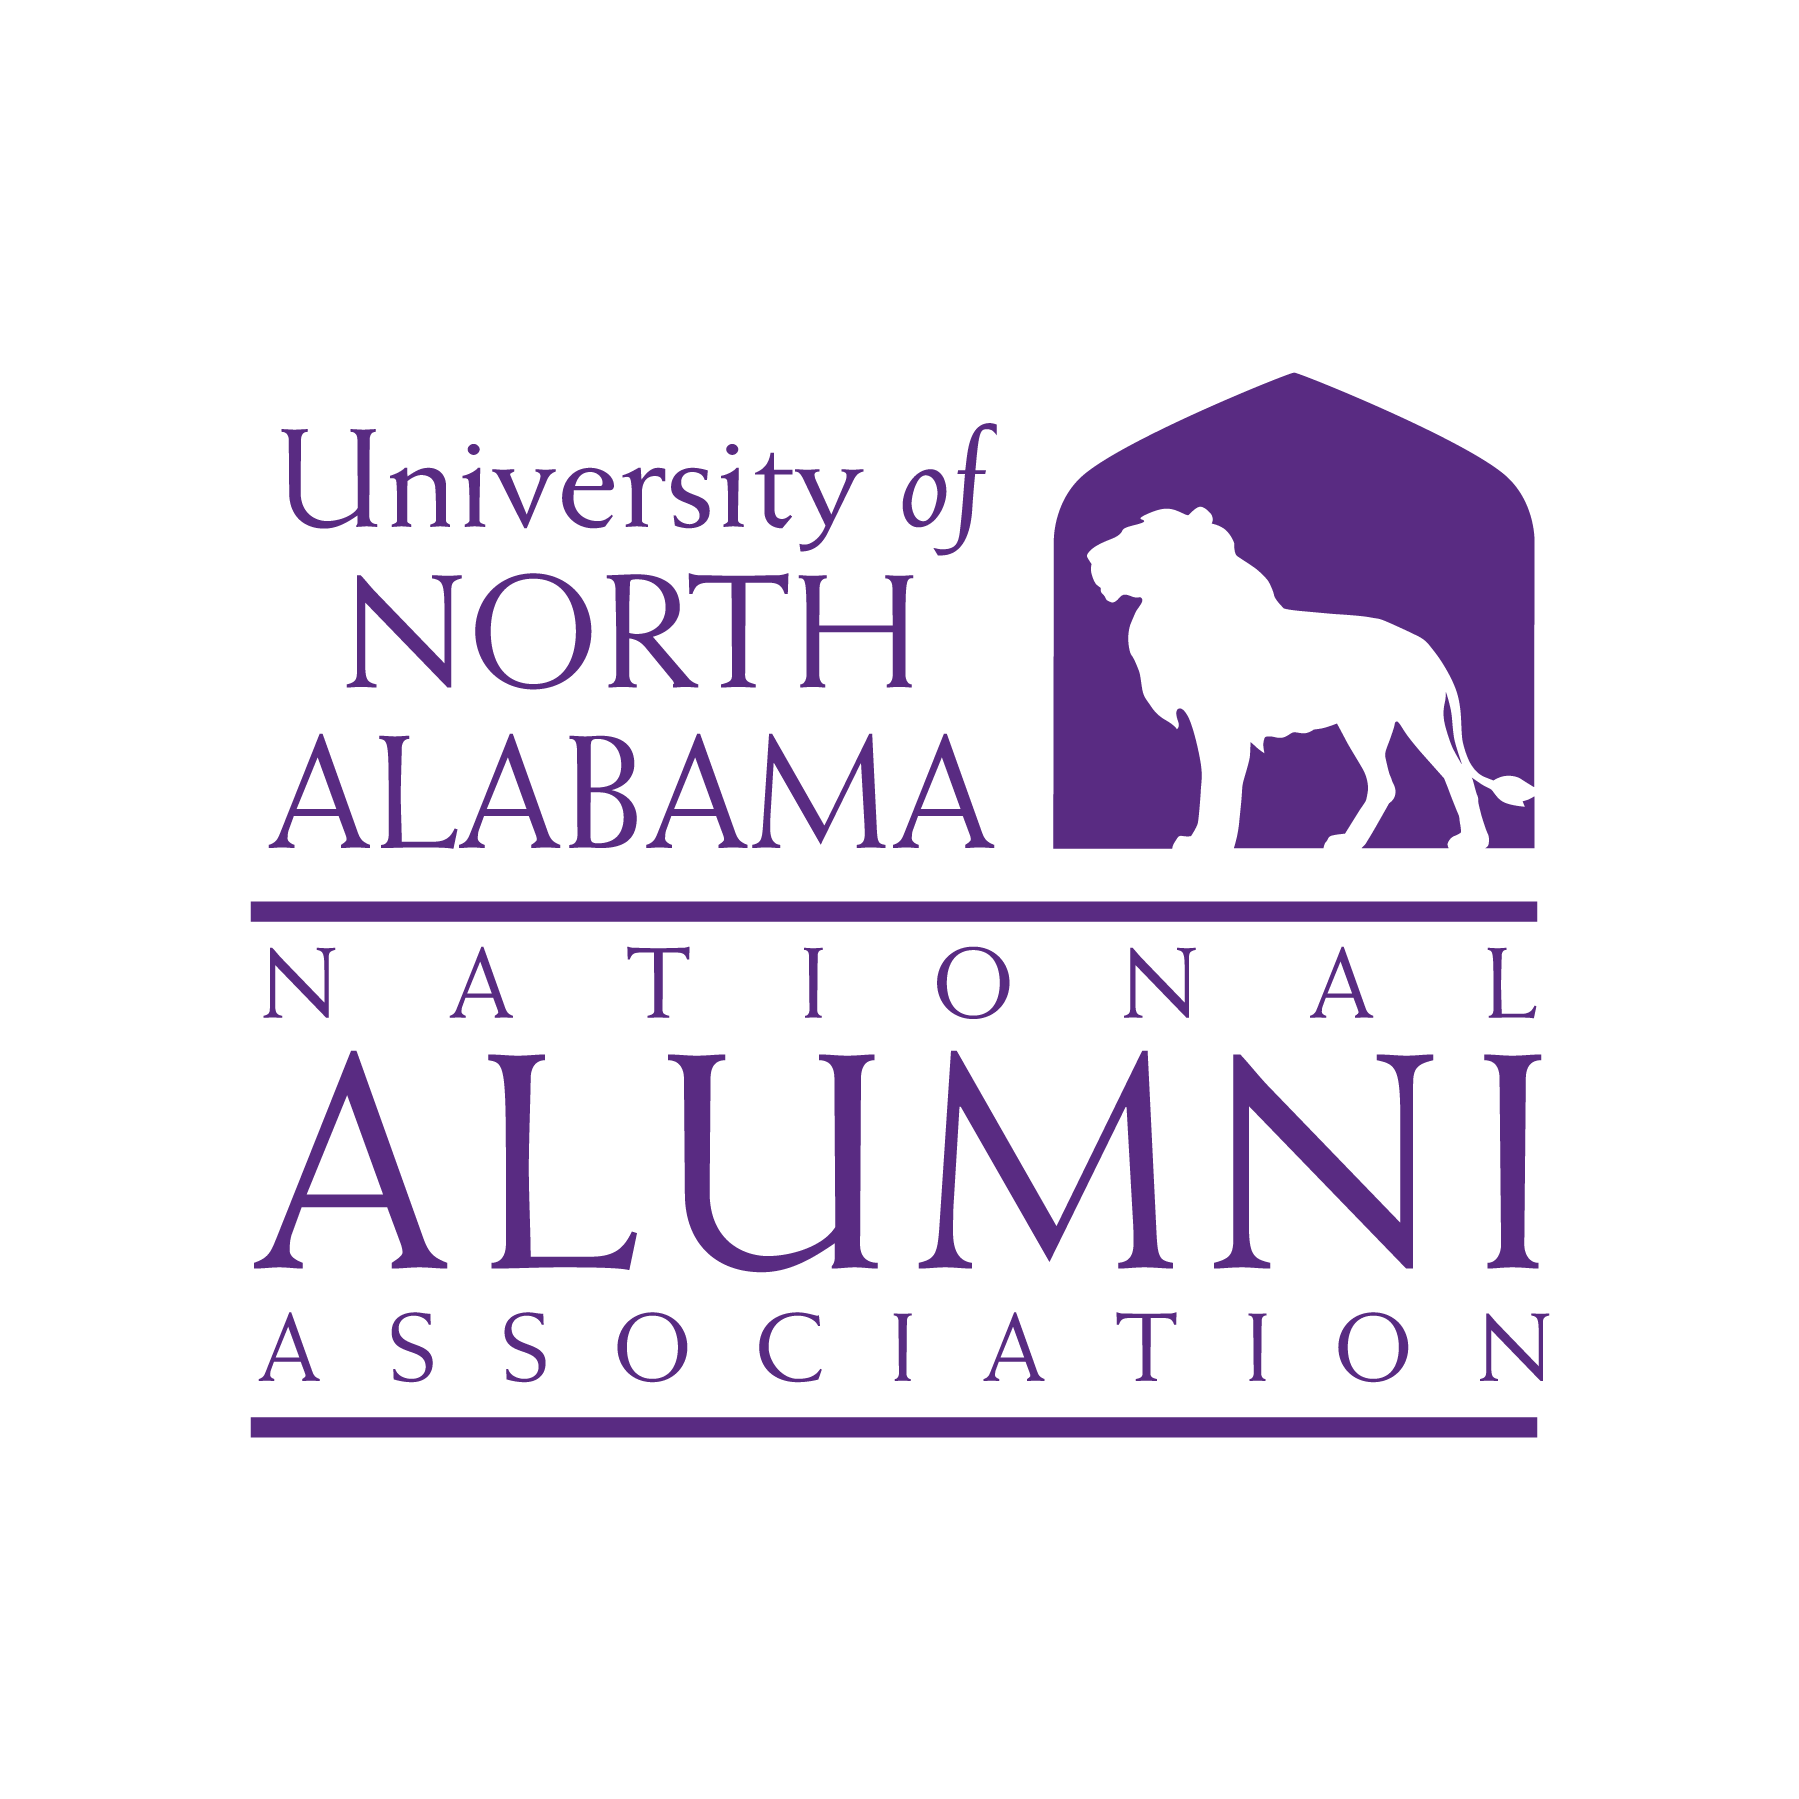 National Alumni Association